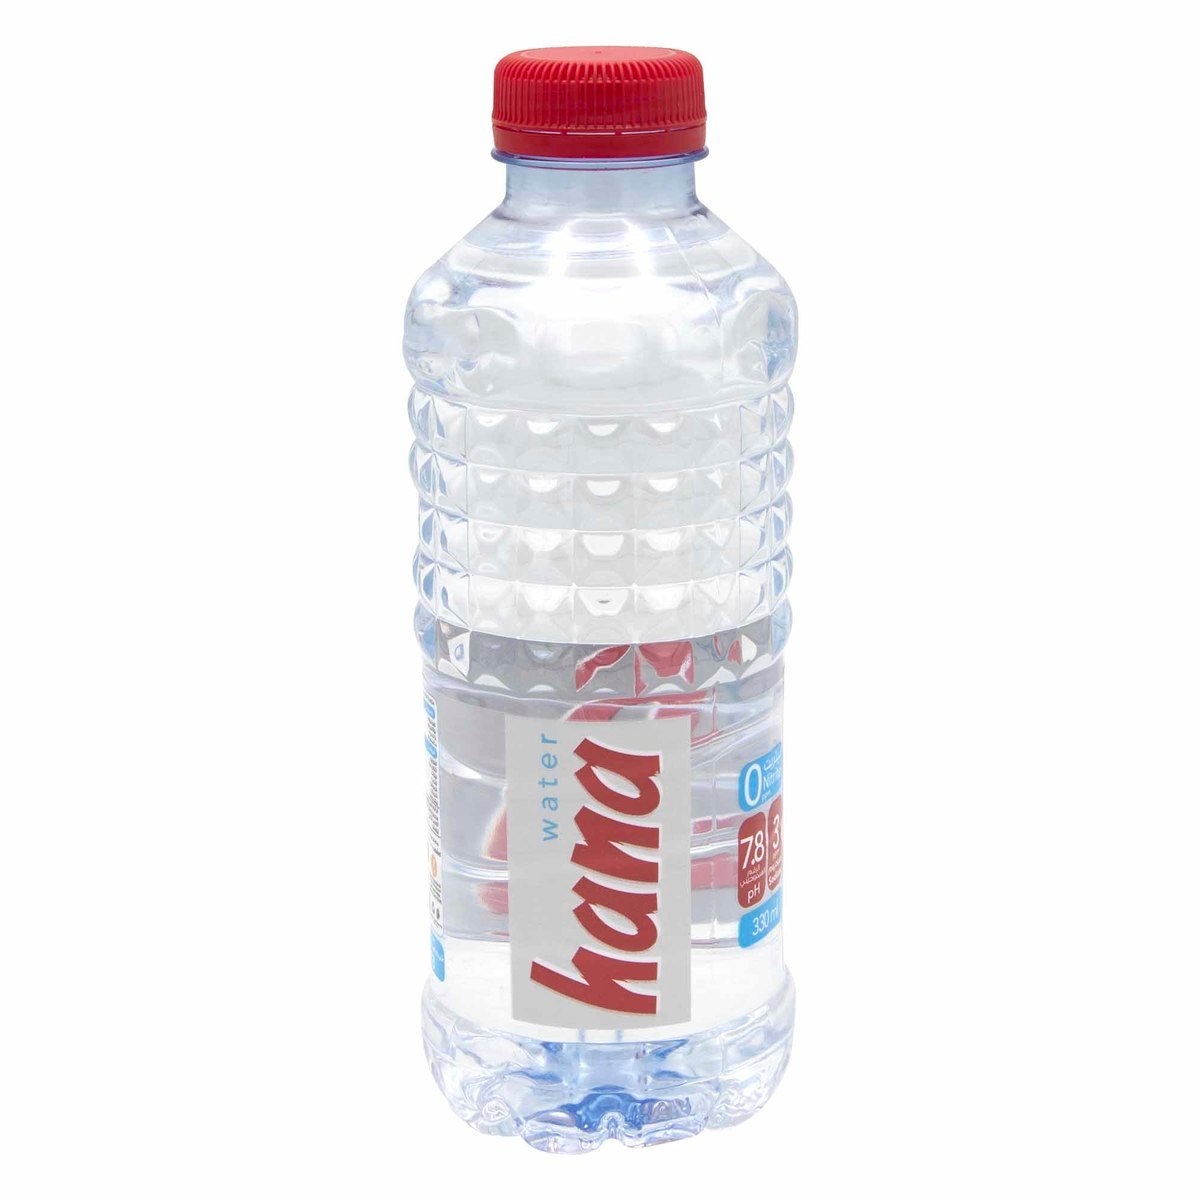 Hana Bottled Drinking Water 24 x 330ml